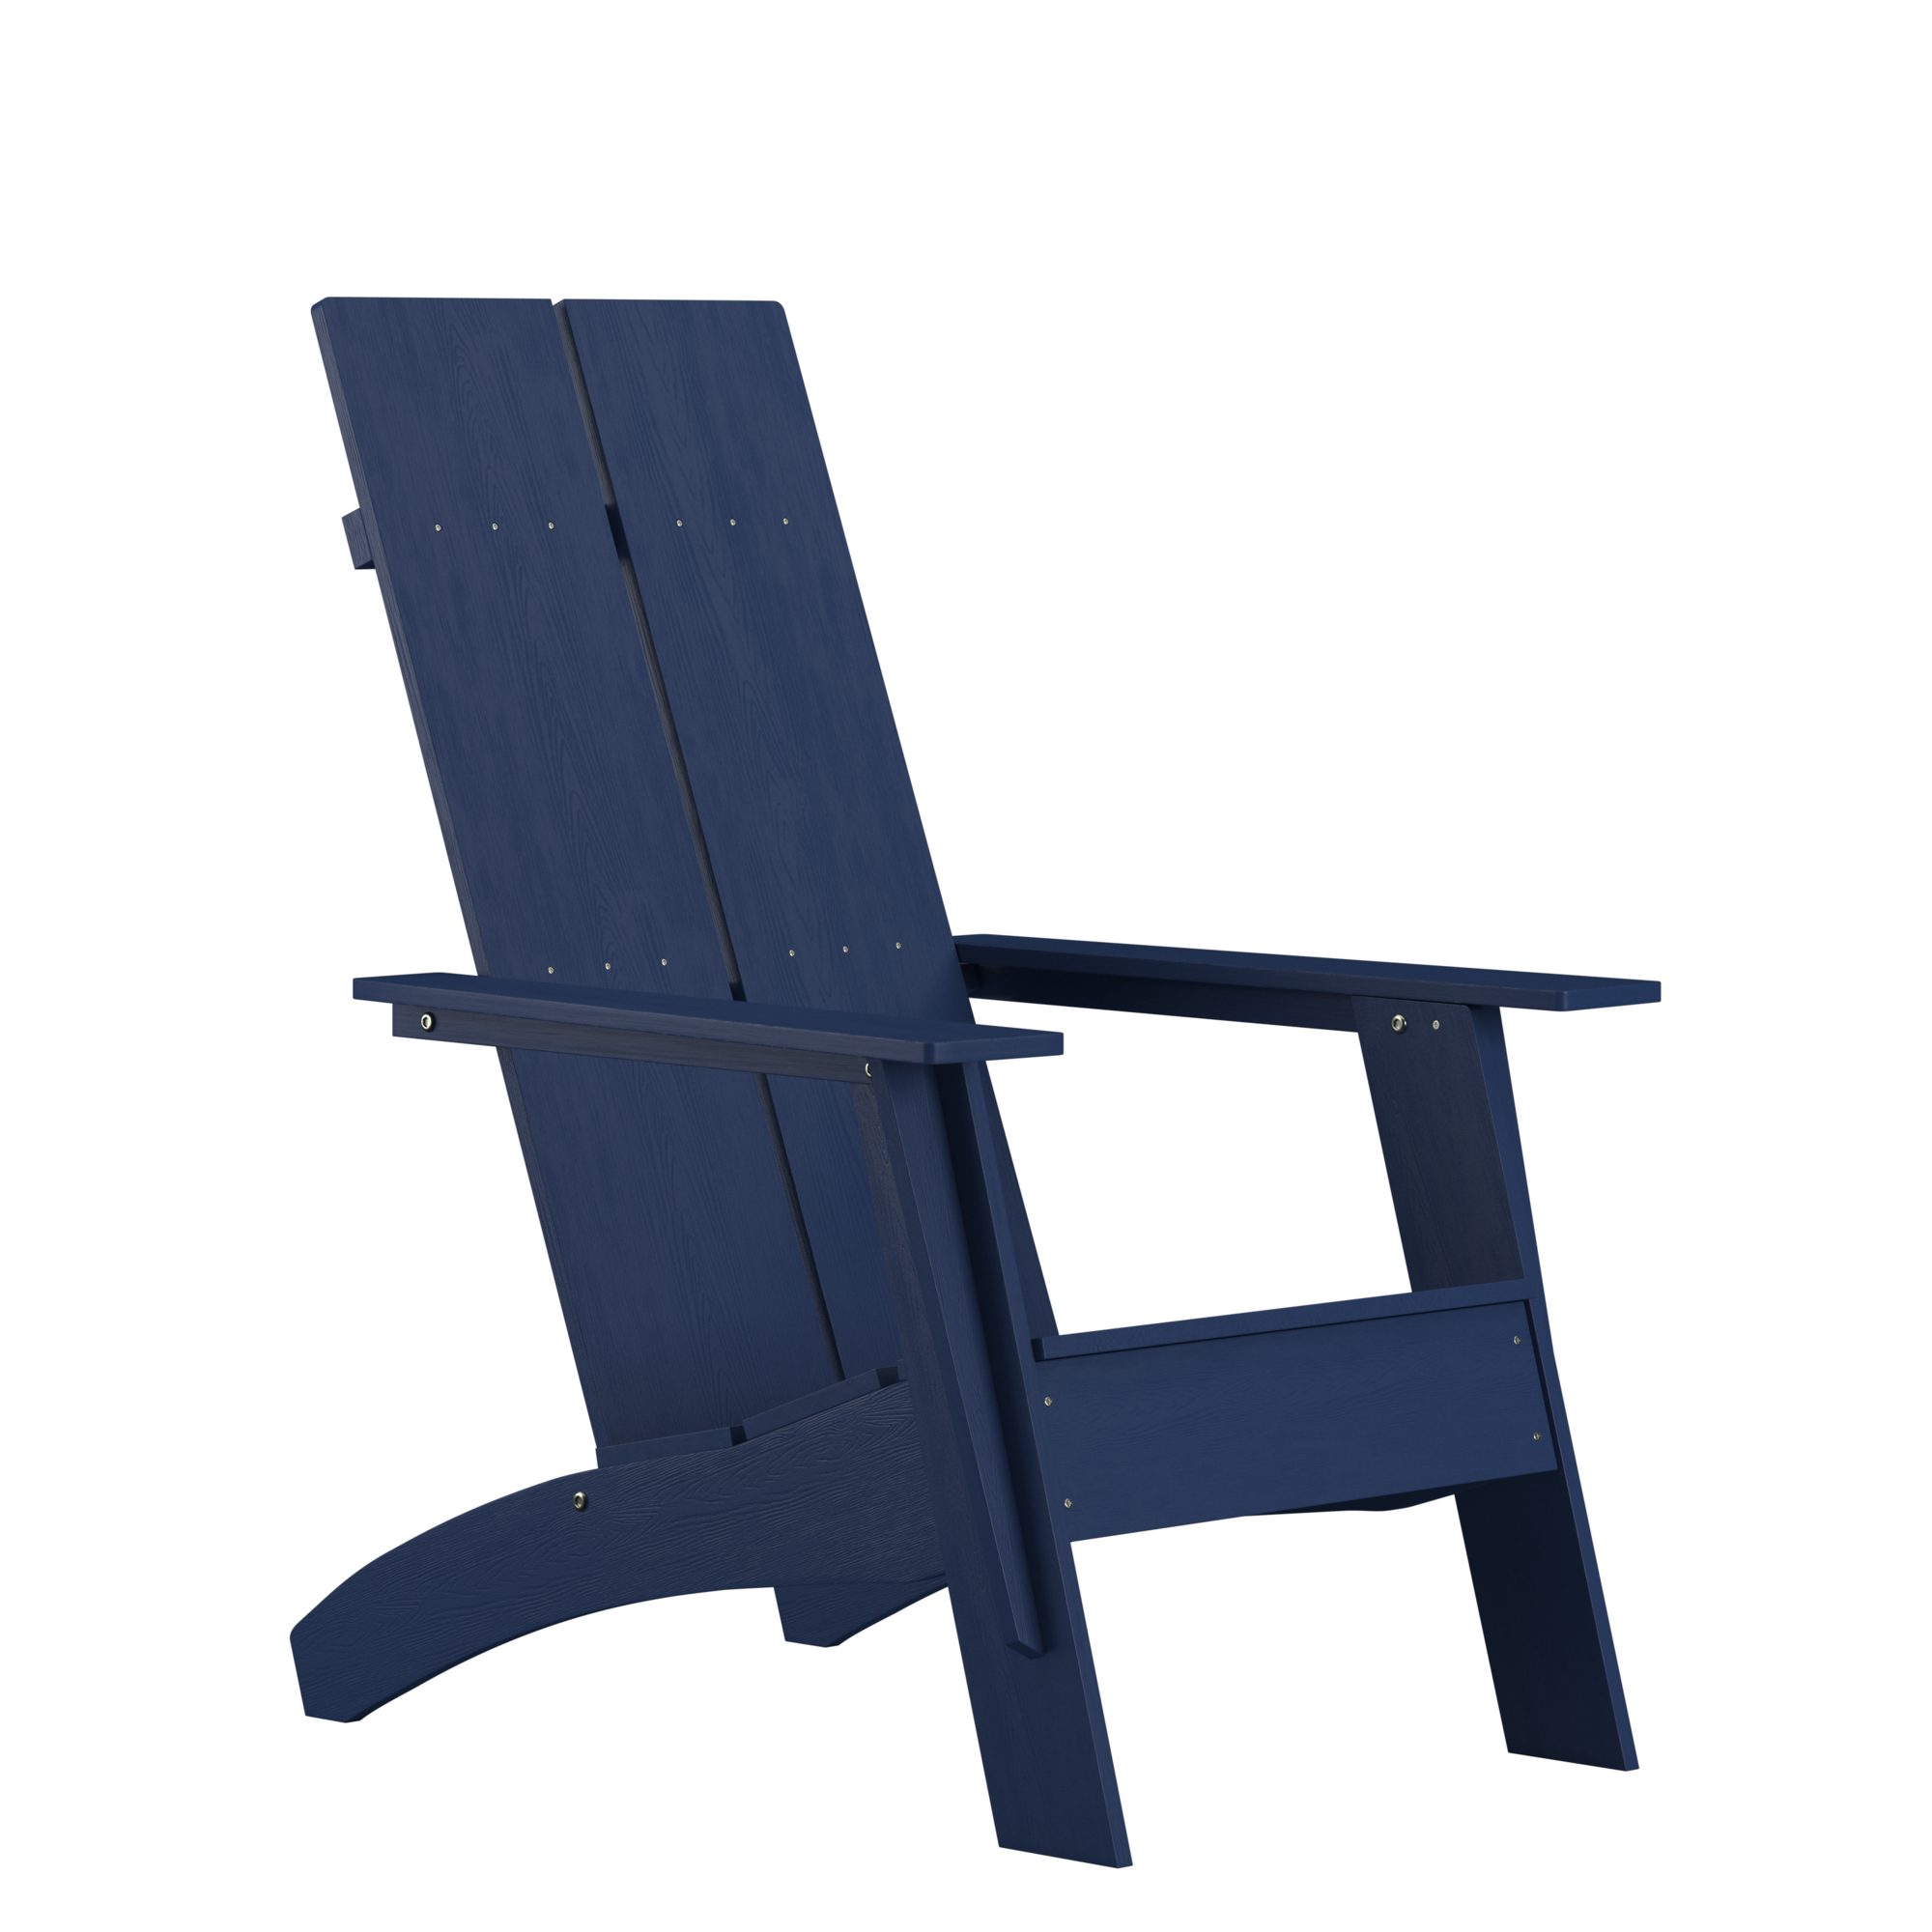 Flash Furniture, Navy Blue Modern Dual Slat Back Adirondack Chair, Primary Color Blue, Material Polystyrene, Width 30.5 in, Model JJC14509NV